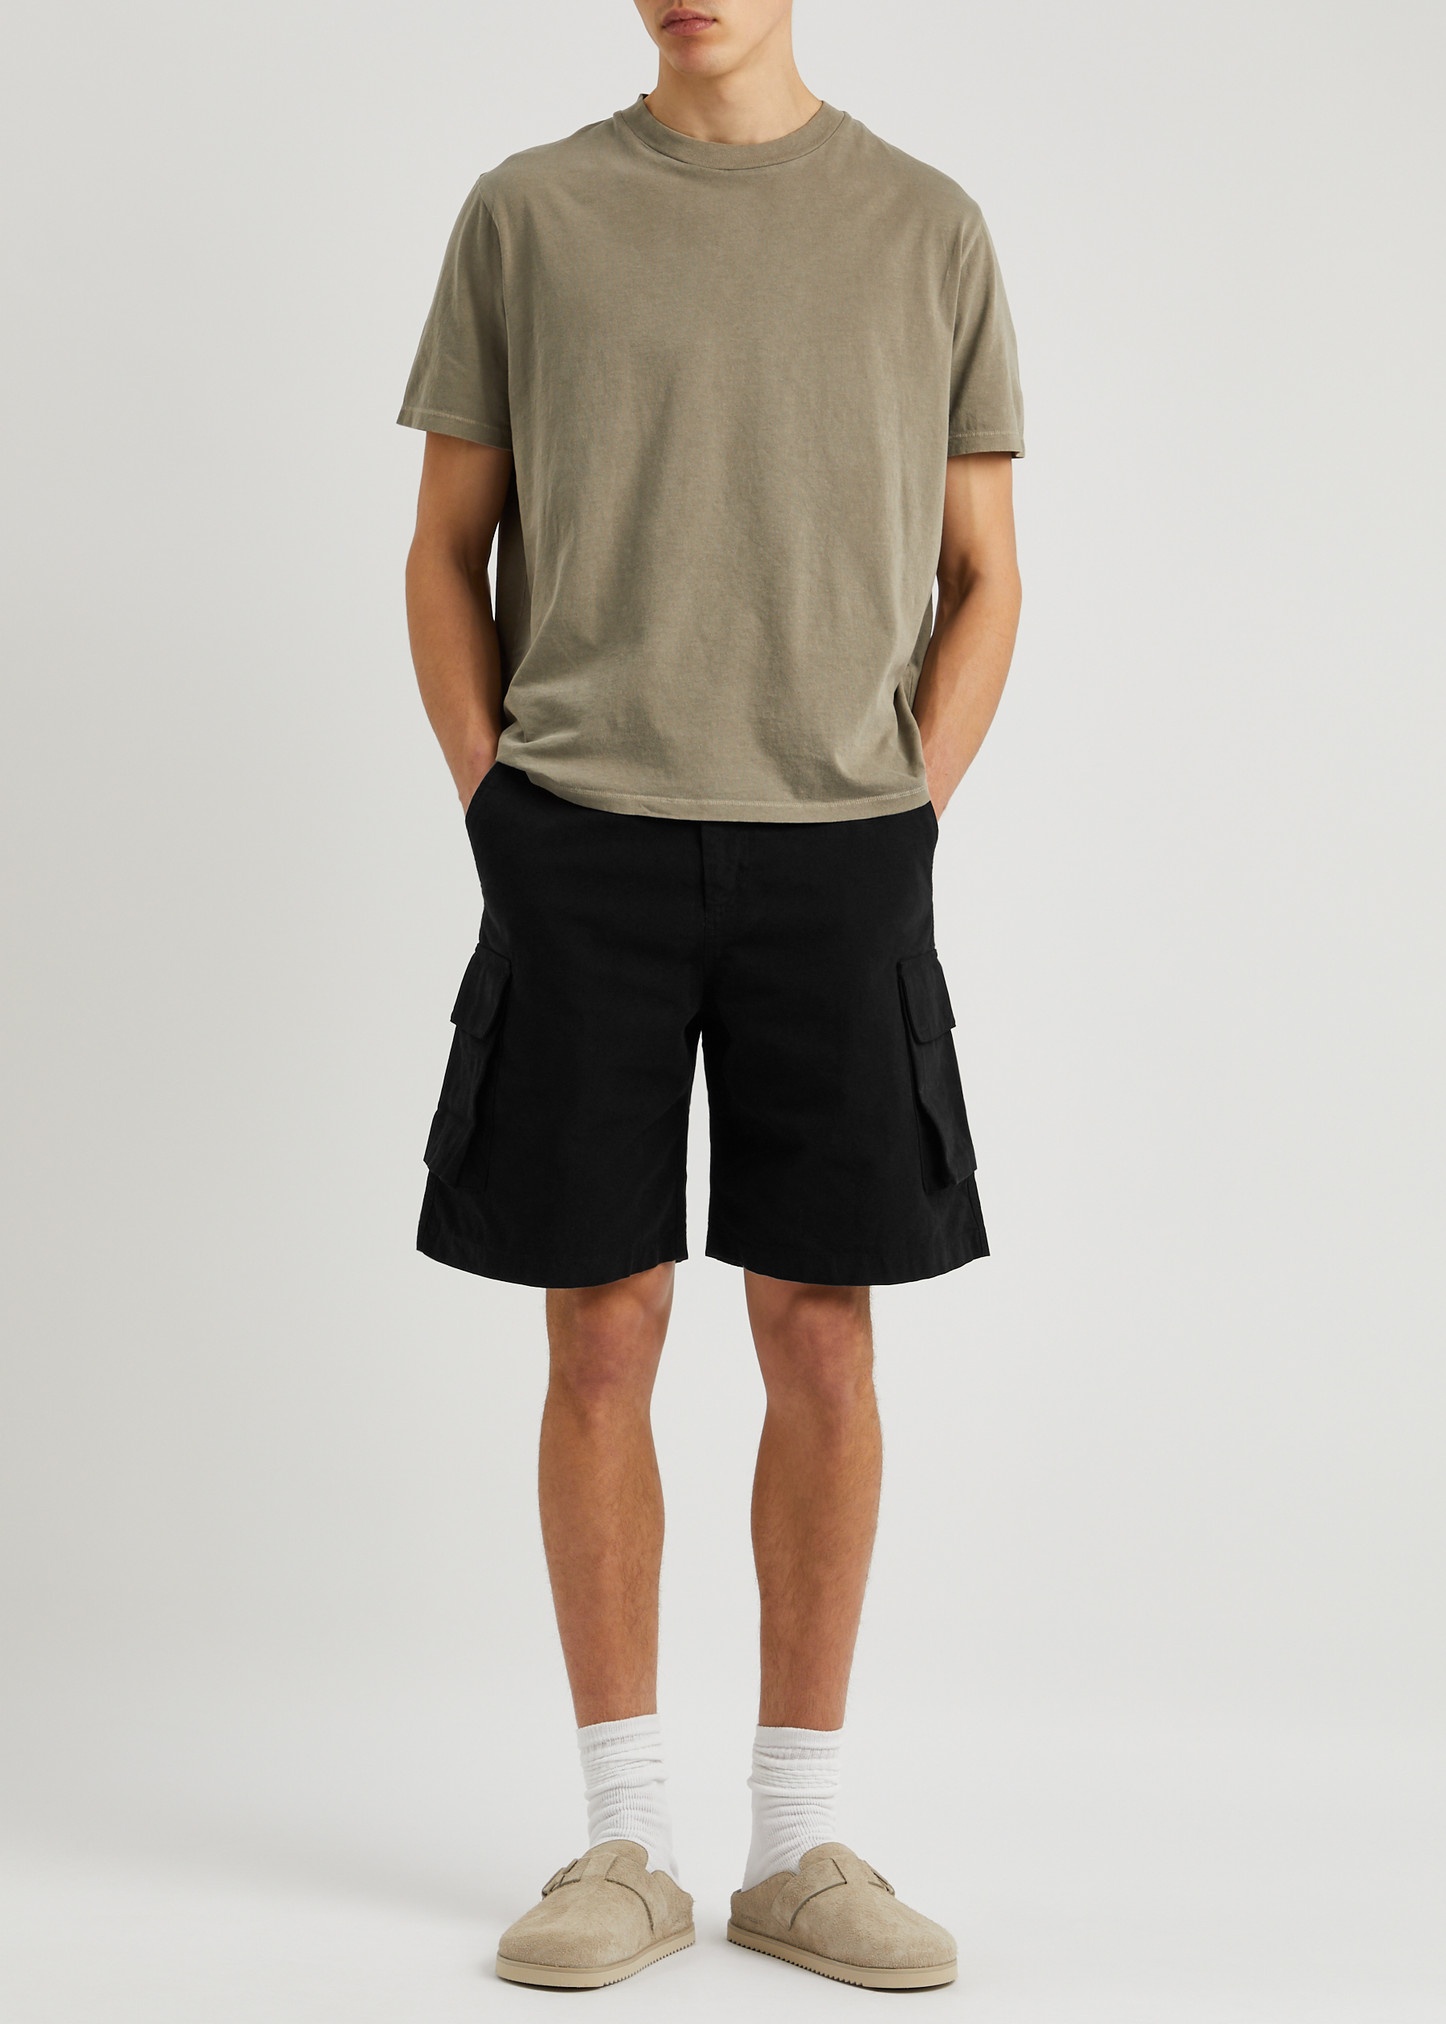 Mount canvas cargo shorts - 4